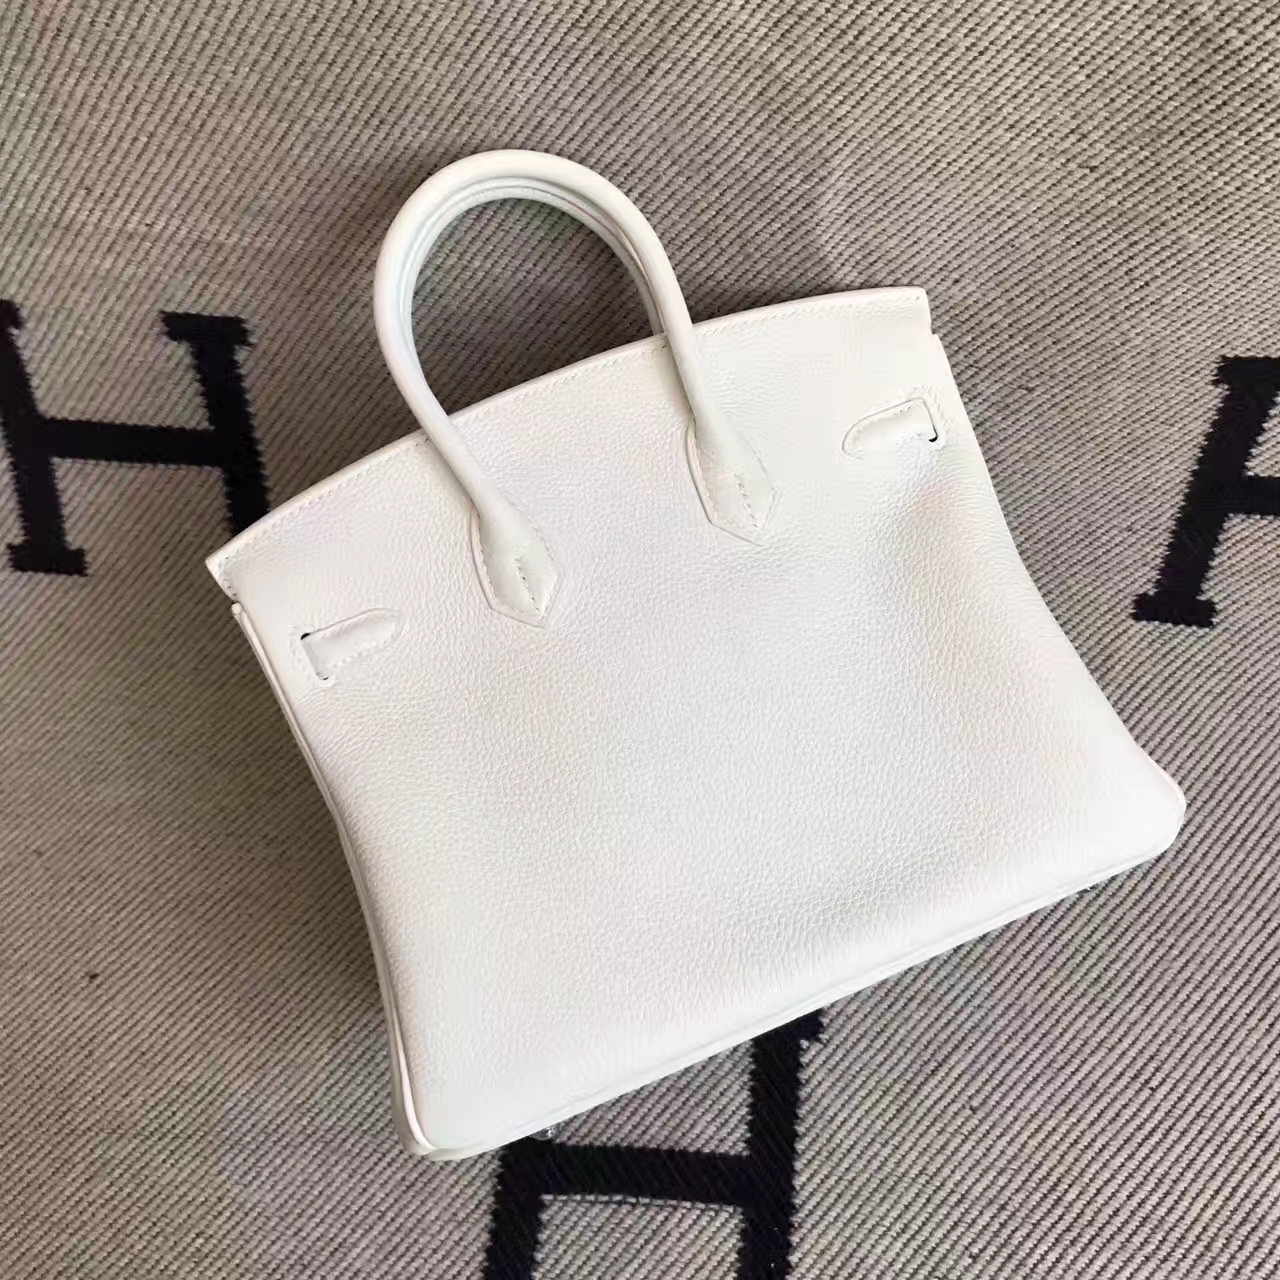 On Sale Hermes 01 Pure White Togo Leather Birkin 25cm Tote Bag